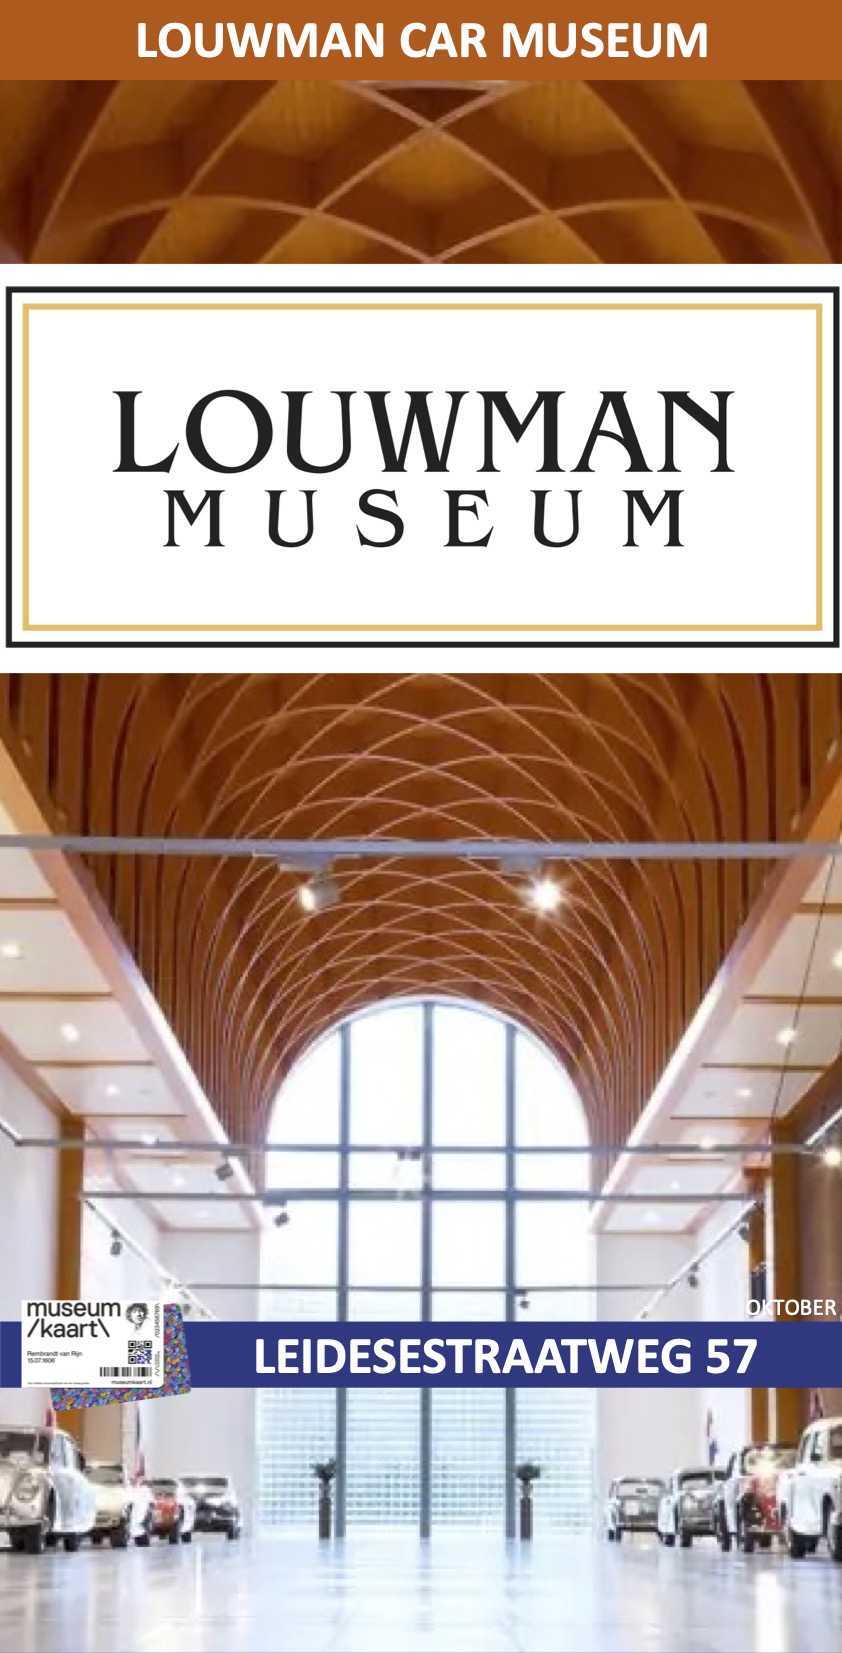 Louwman Automuseum Wassenaar Museumkaart oktober